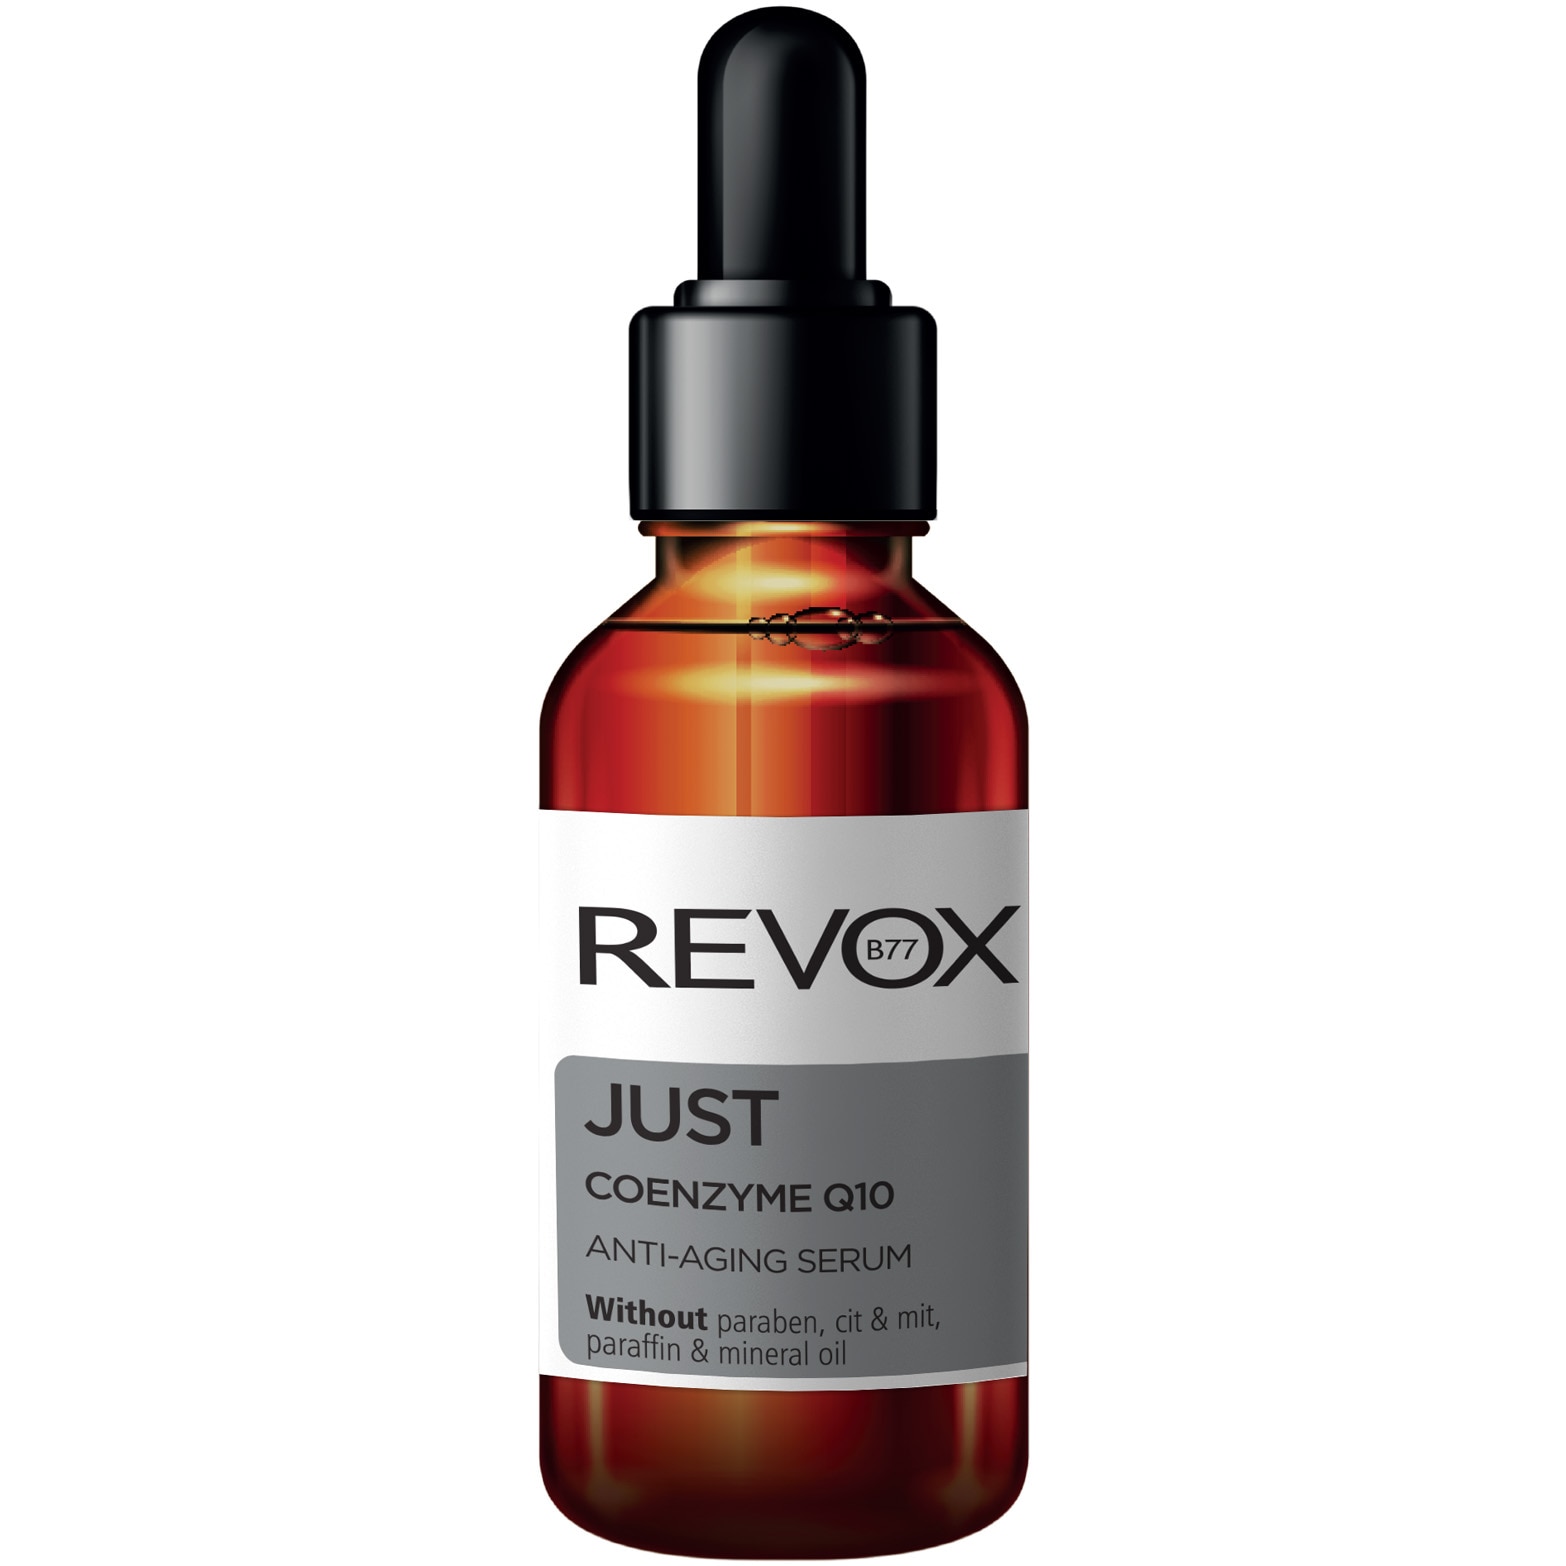 Review pentru Serum Revox, Coenzyme Q10 Anti-aging, 30 ml eMAG.ro